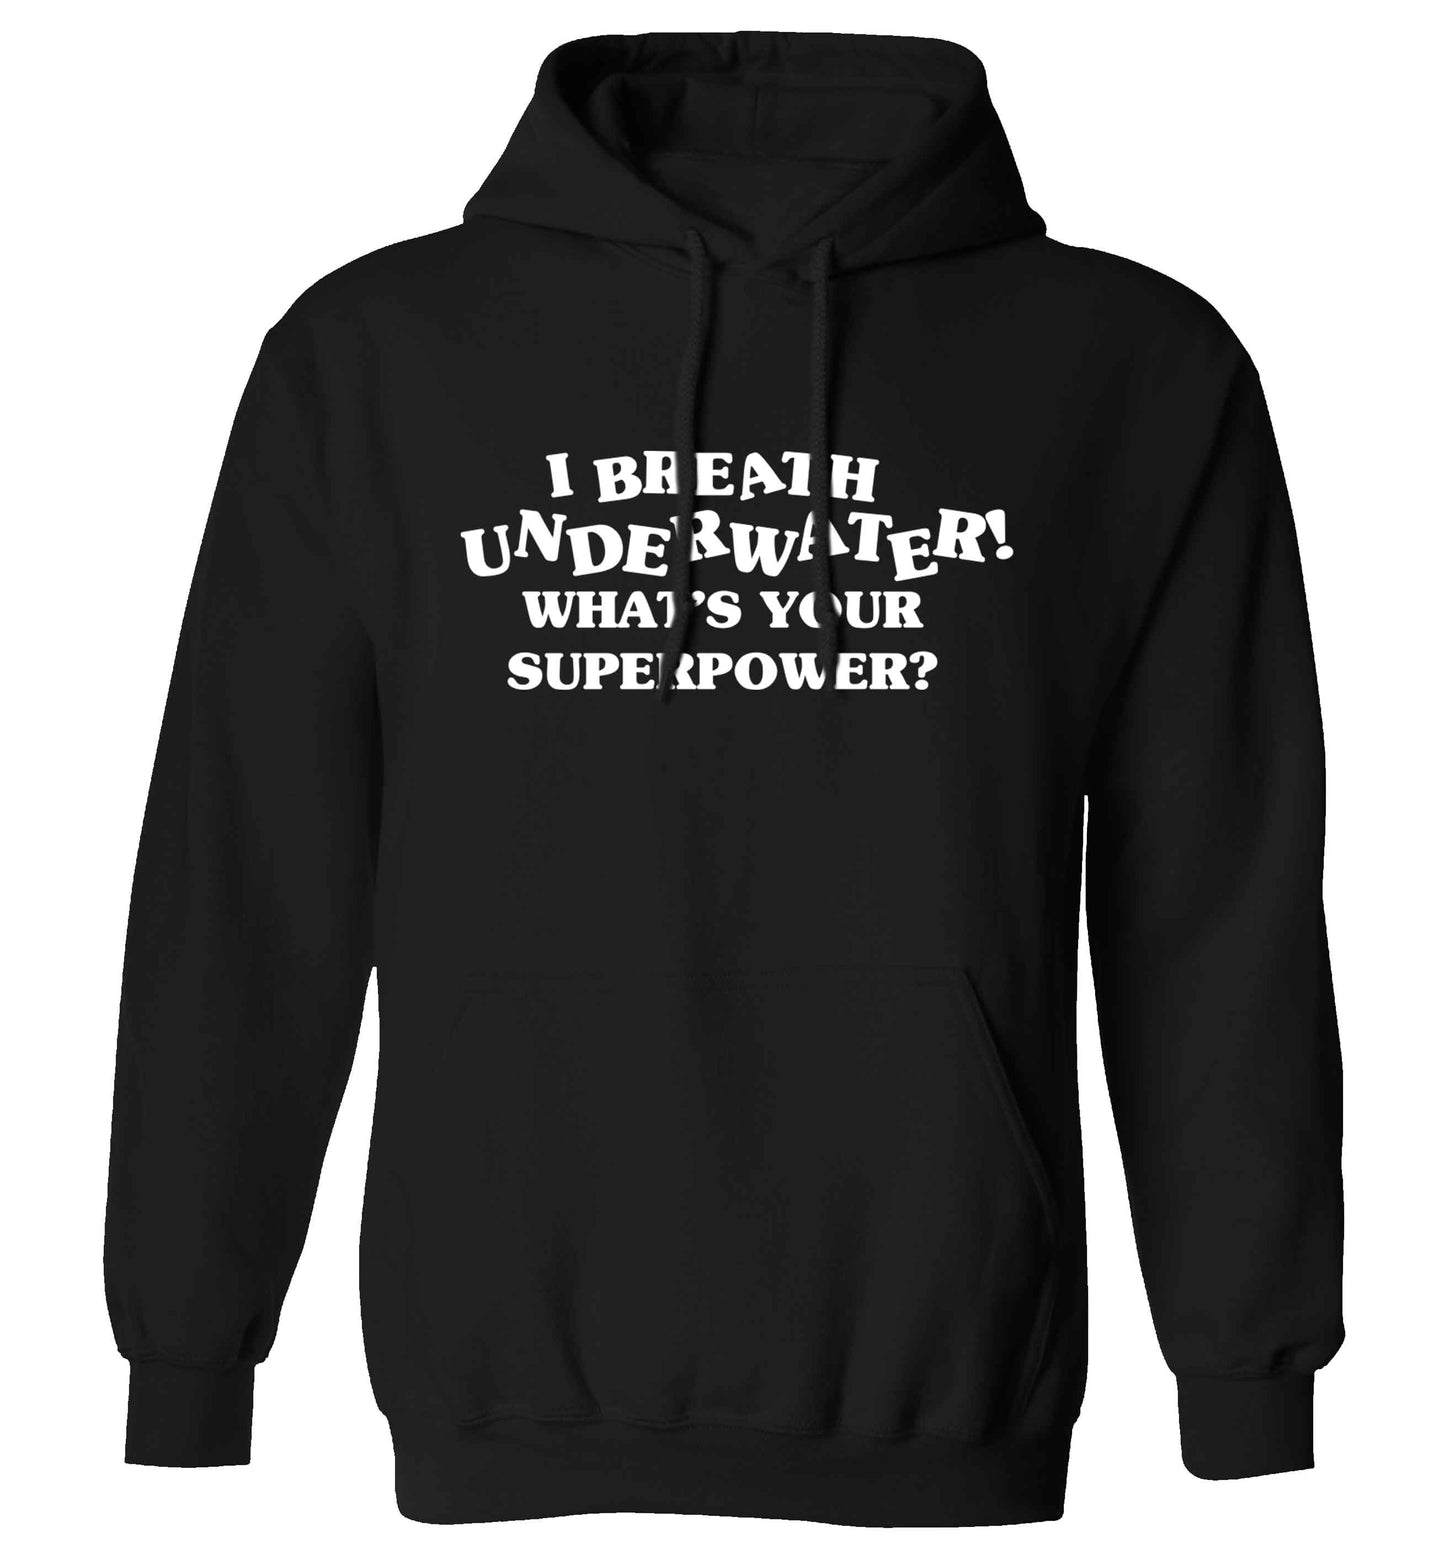 I breath underwater what's your superpower? adults unisex black hoodie 2XL